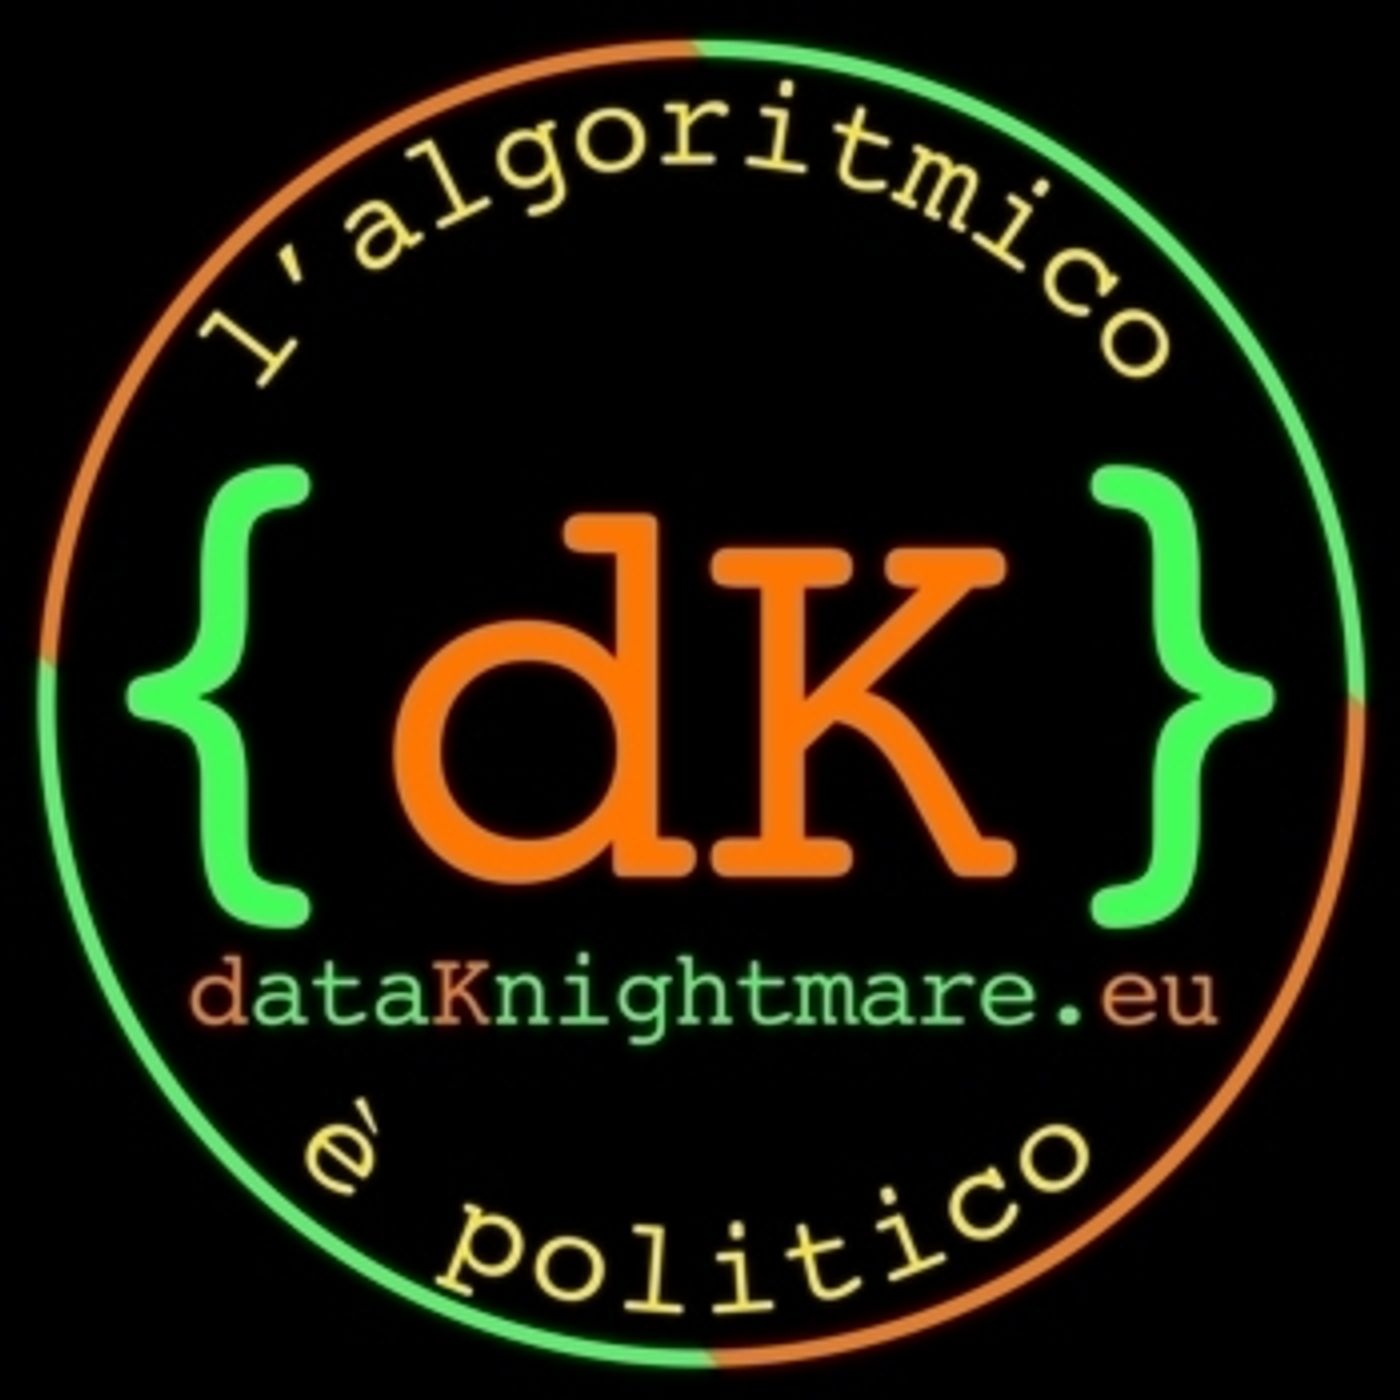 DK 3x27.1 - Non moriremo di copyright